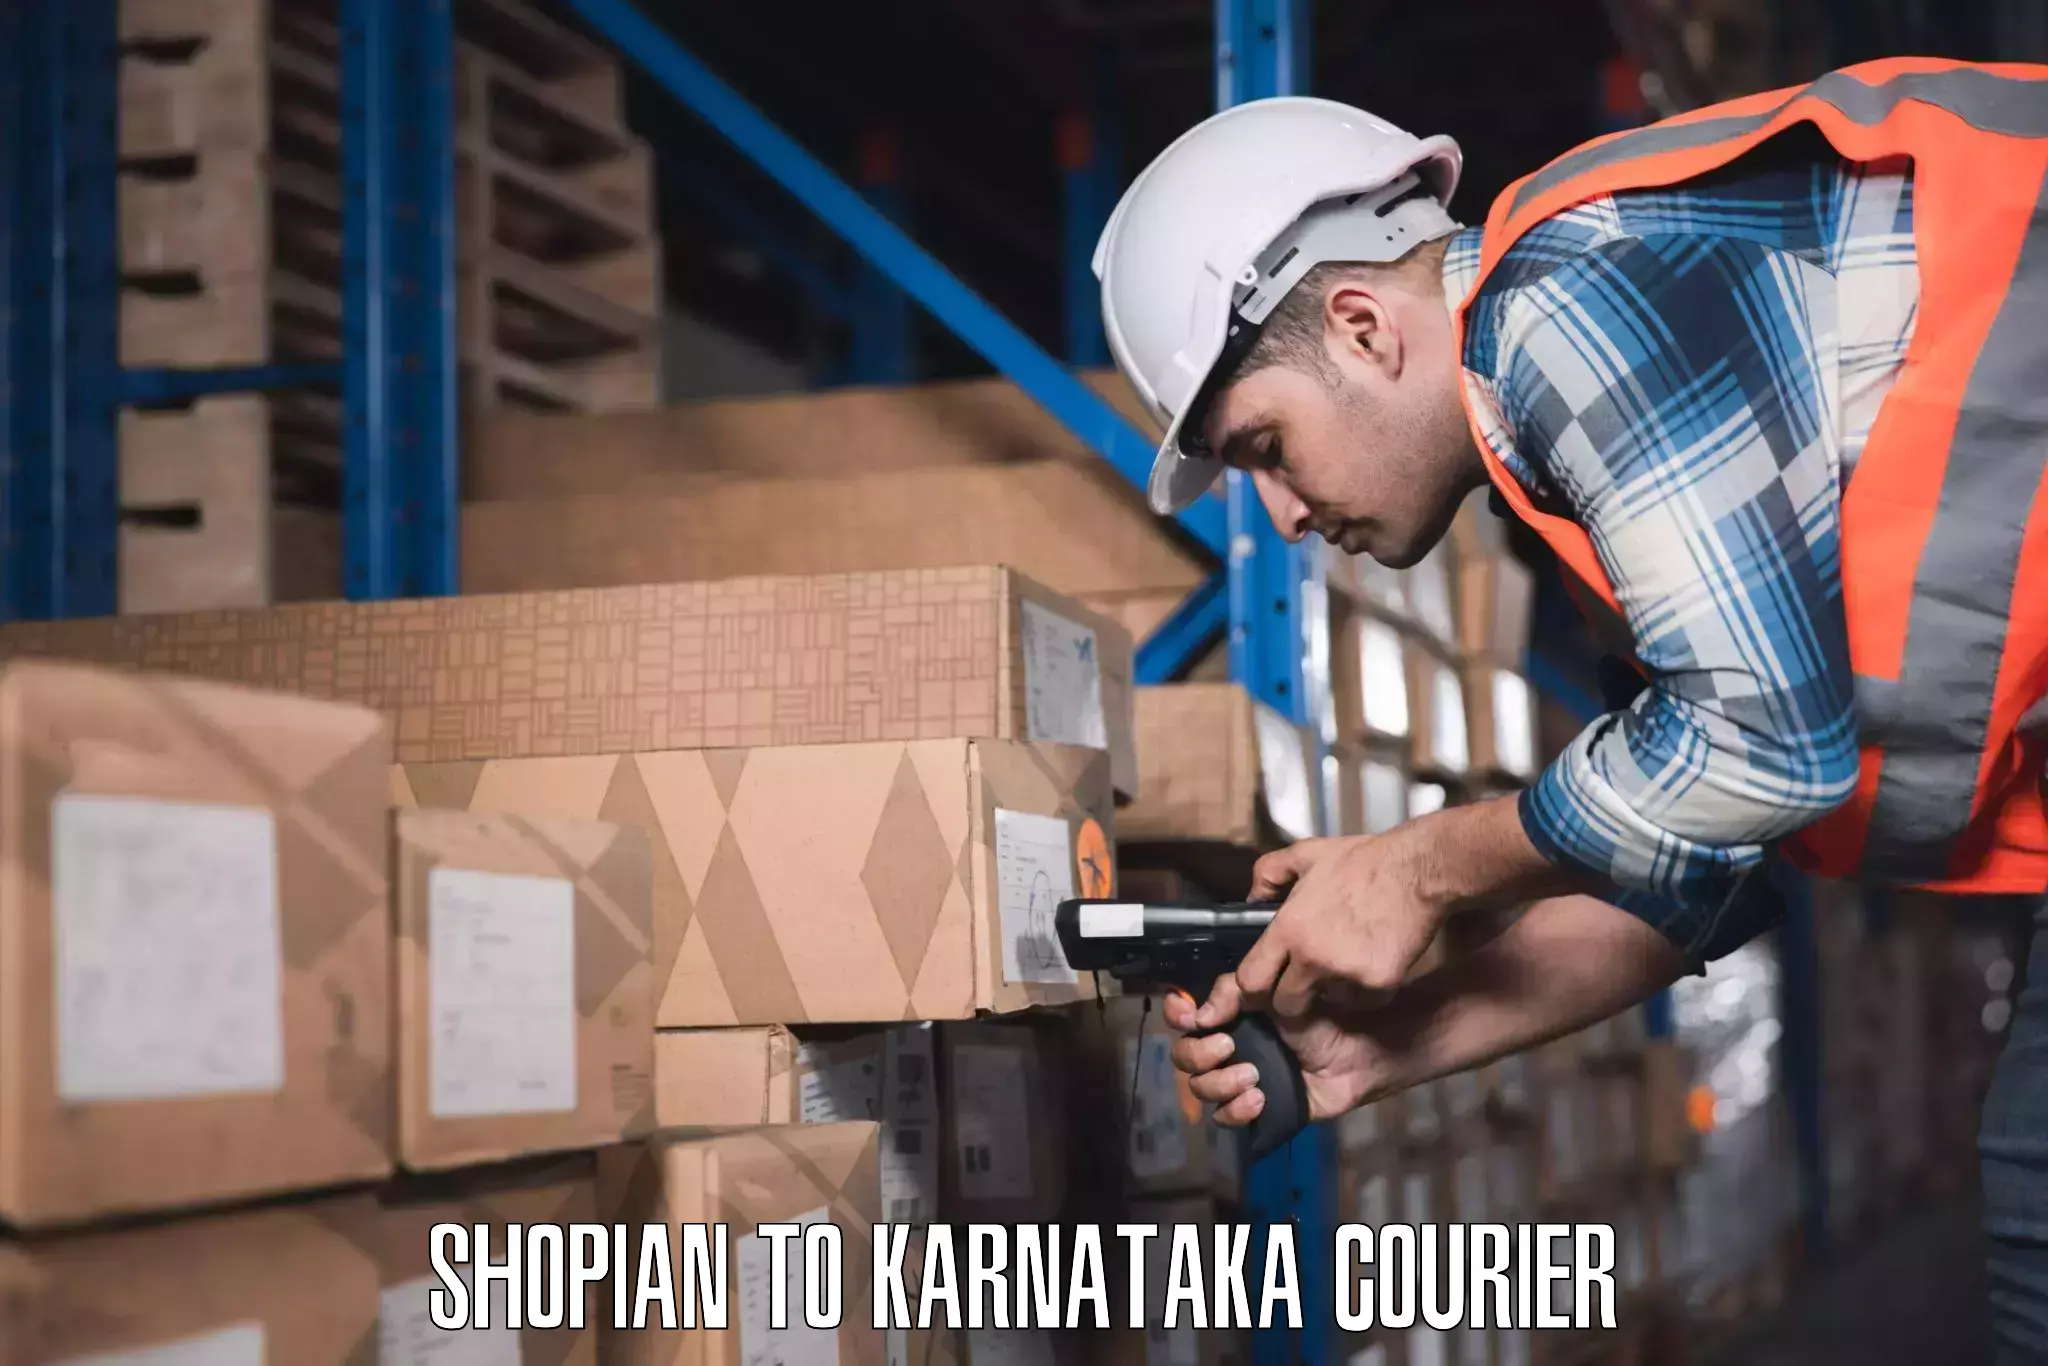 Luggage delivery app Shopian to Karnataka